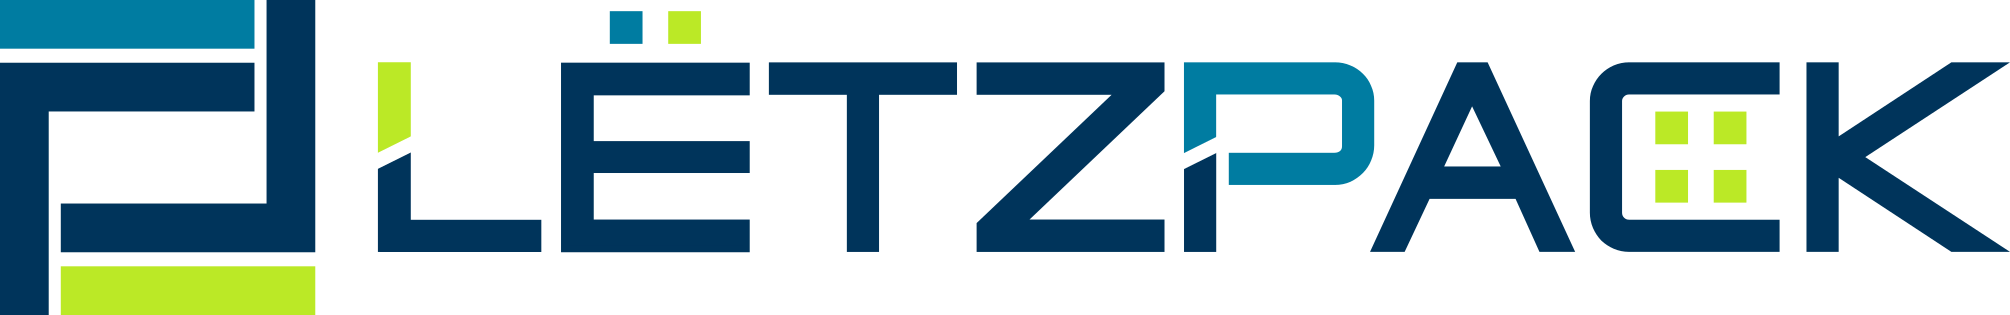 LetzPack long logo